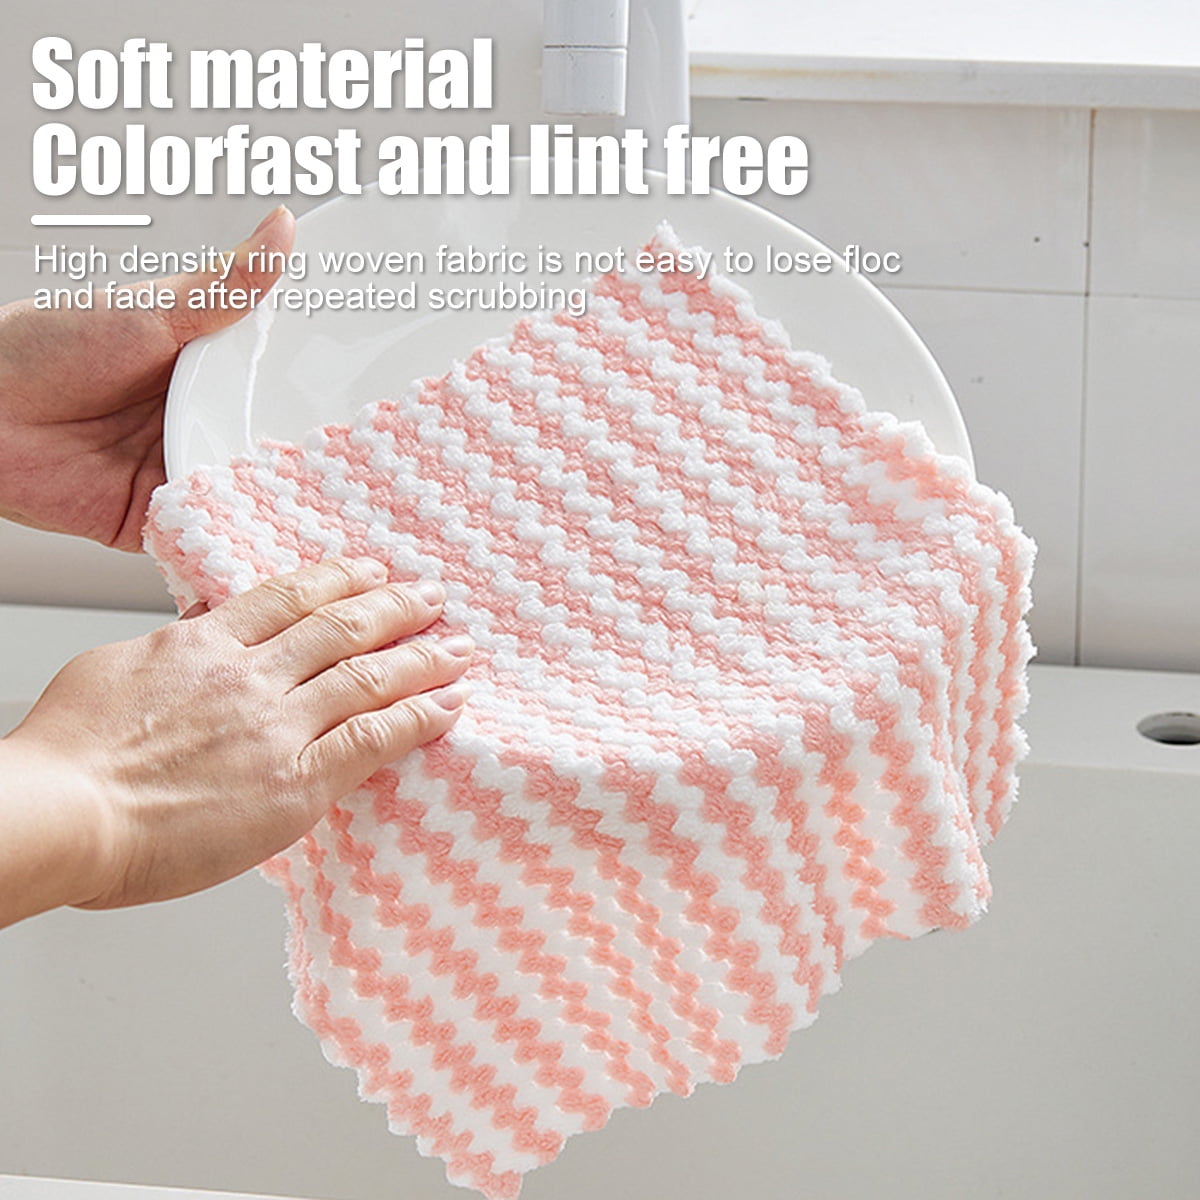 5pcs Kitchen Dish Cloths Soft Absorbent Dish Rag Reusable Dish Towels Household Washable Cleaning Cloth Housework Clean Towel Kitchen Cleaning